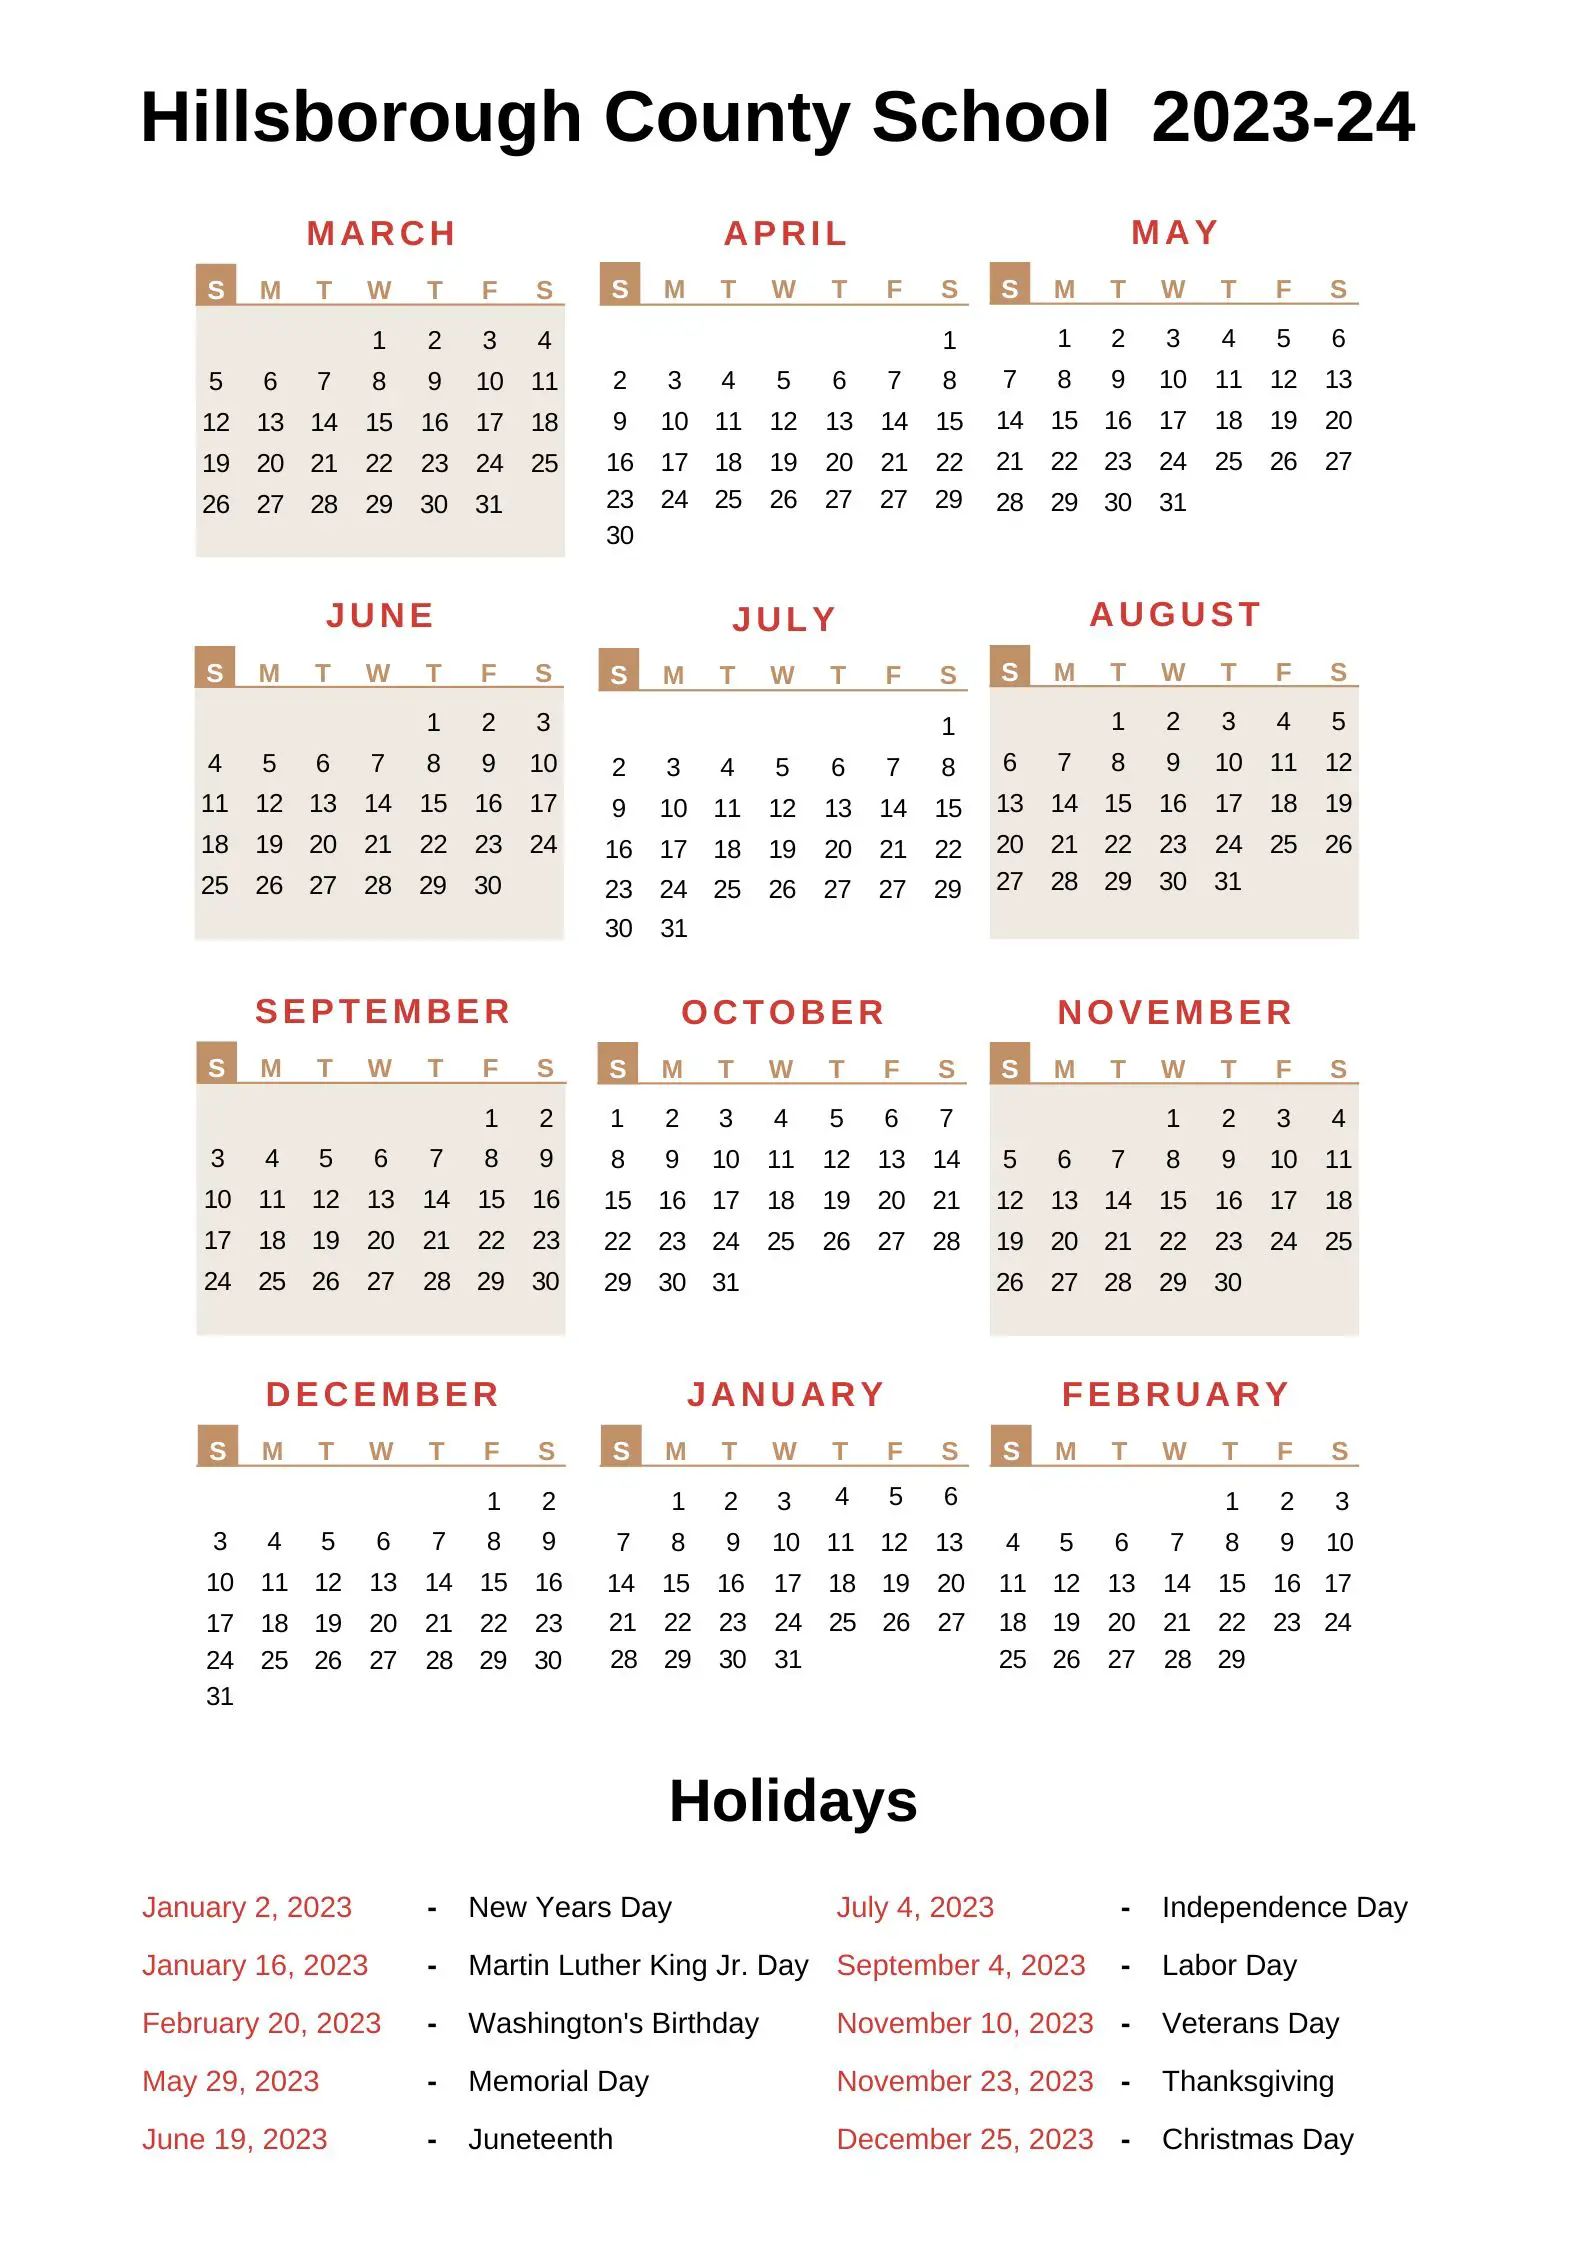 Hillsborough County School Calendar (20222023) With Holidays